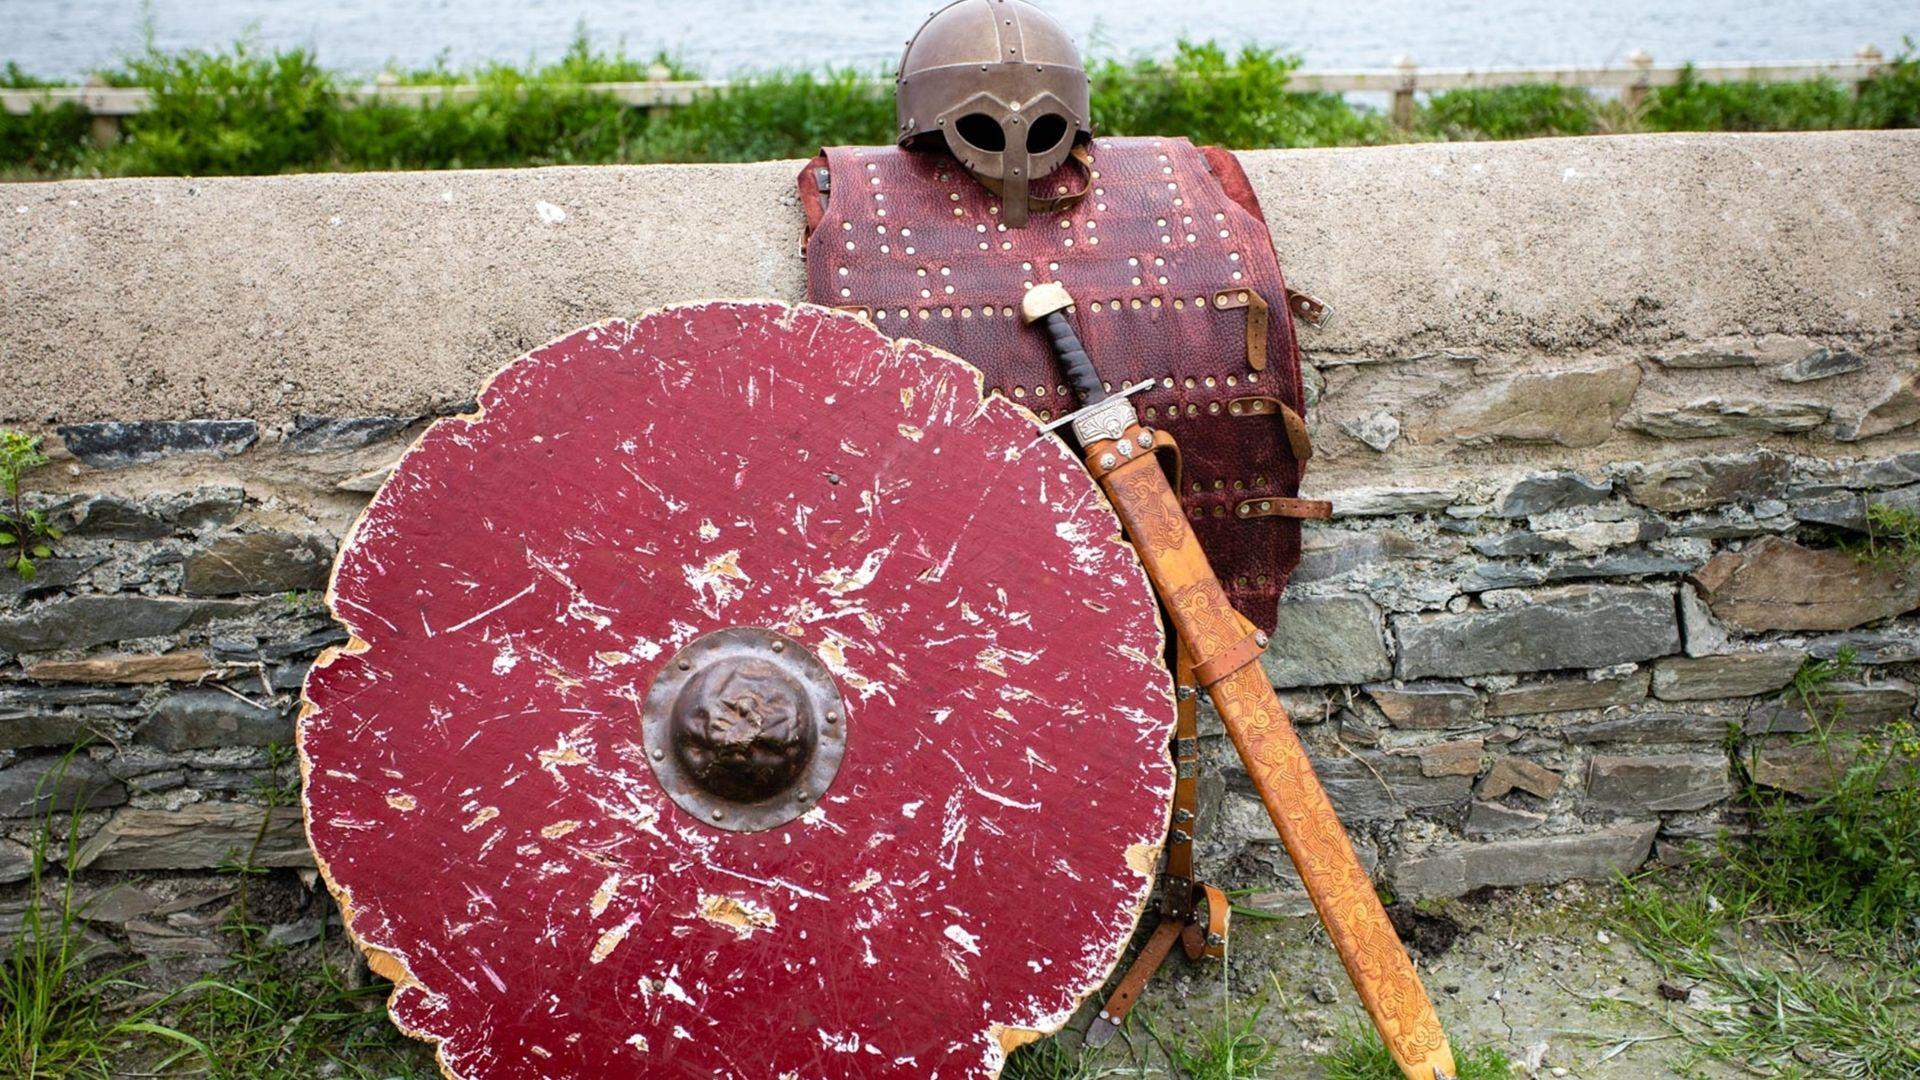 Vikings History